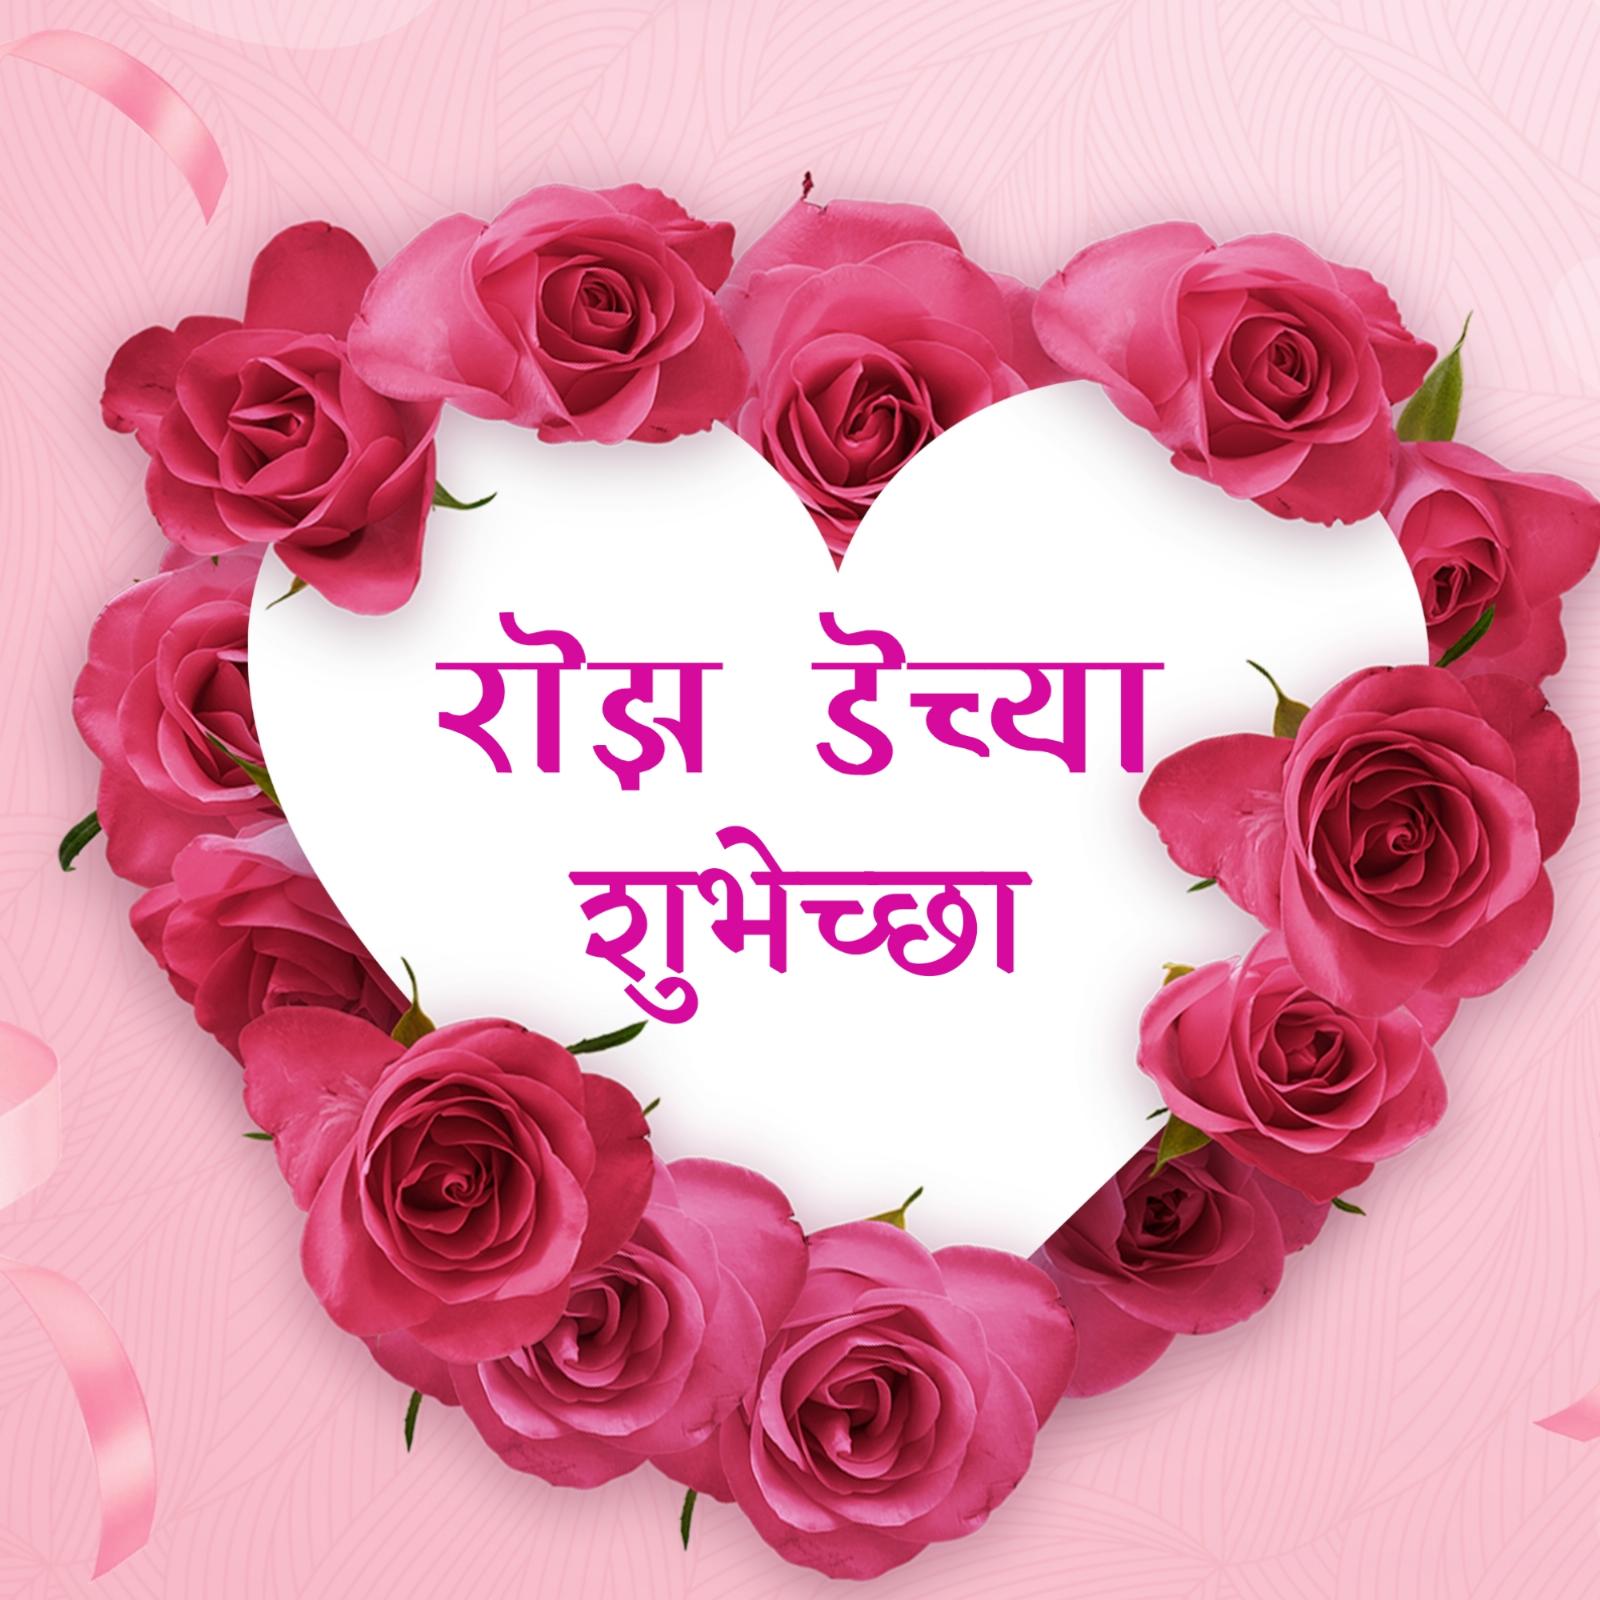 Happy Rose Day In Marathi